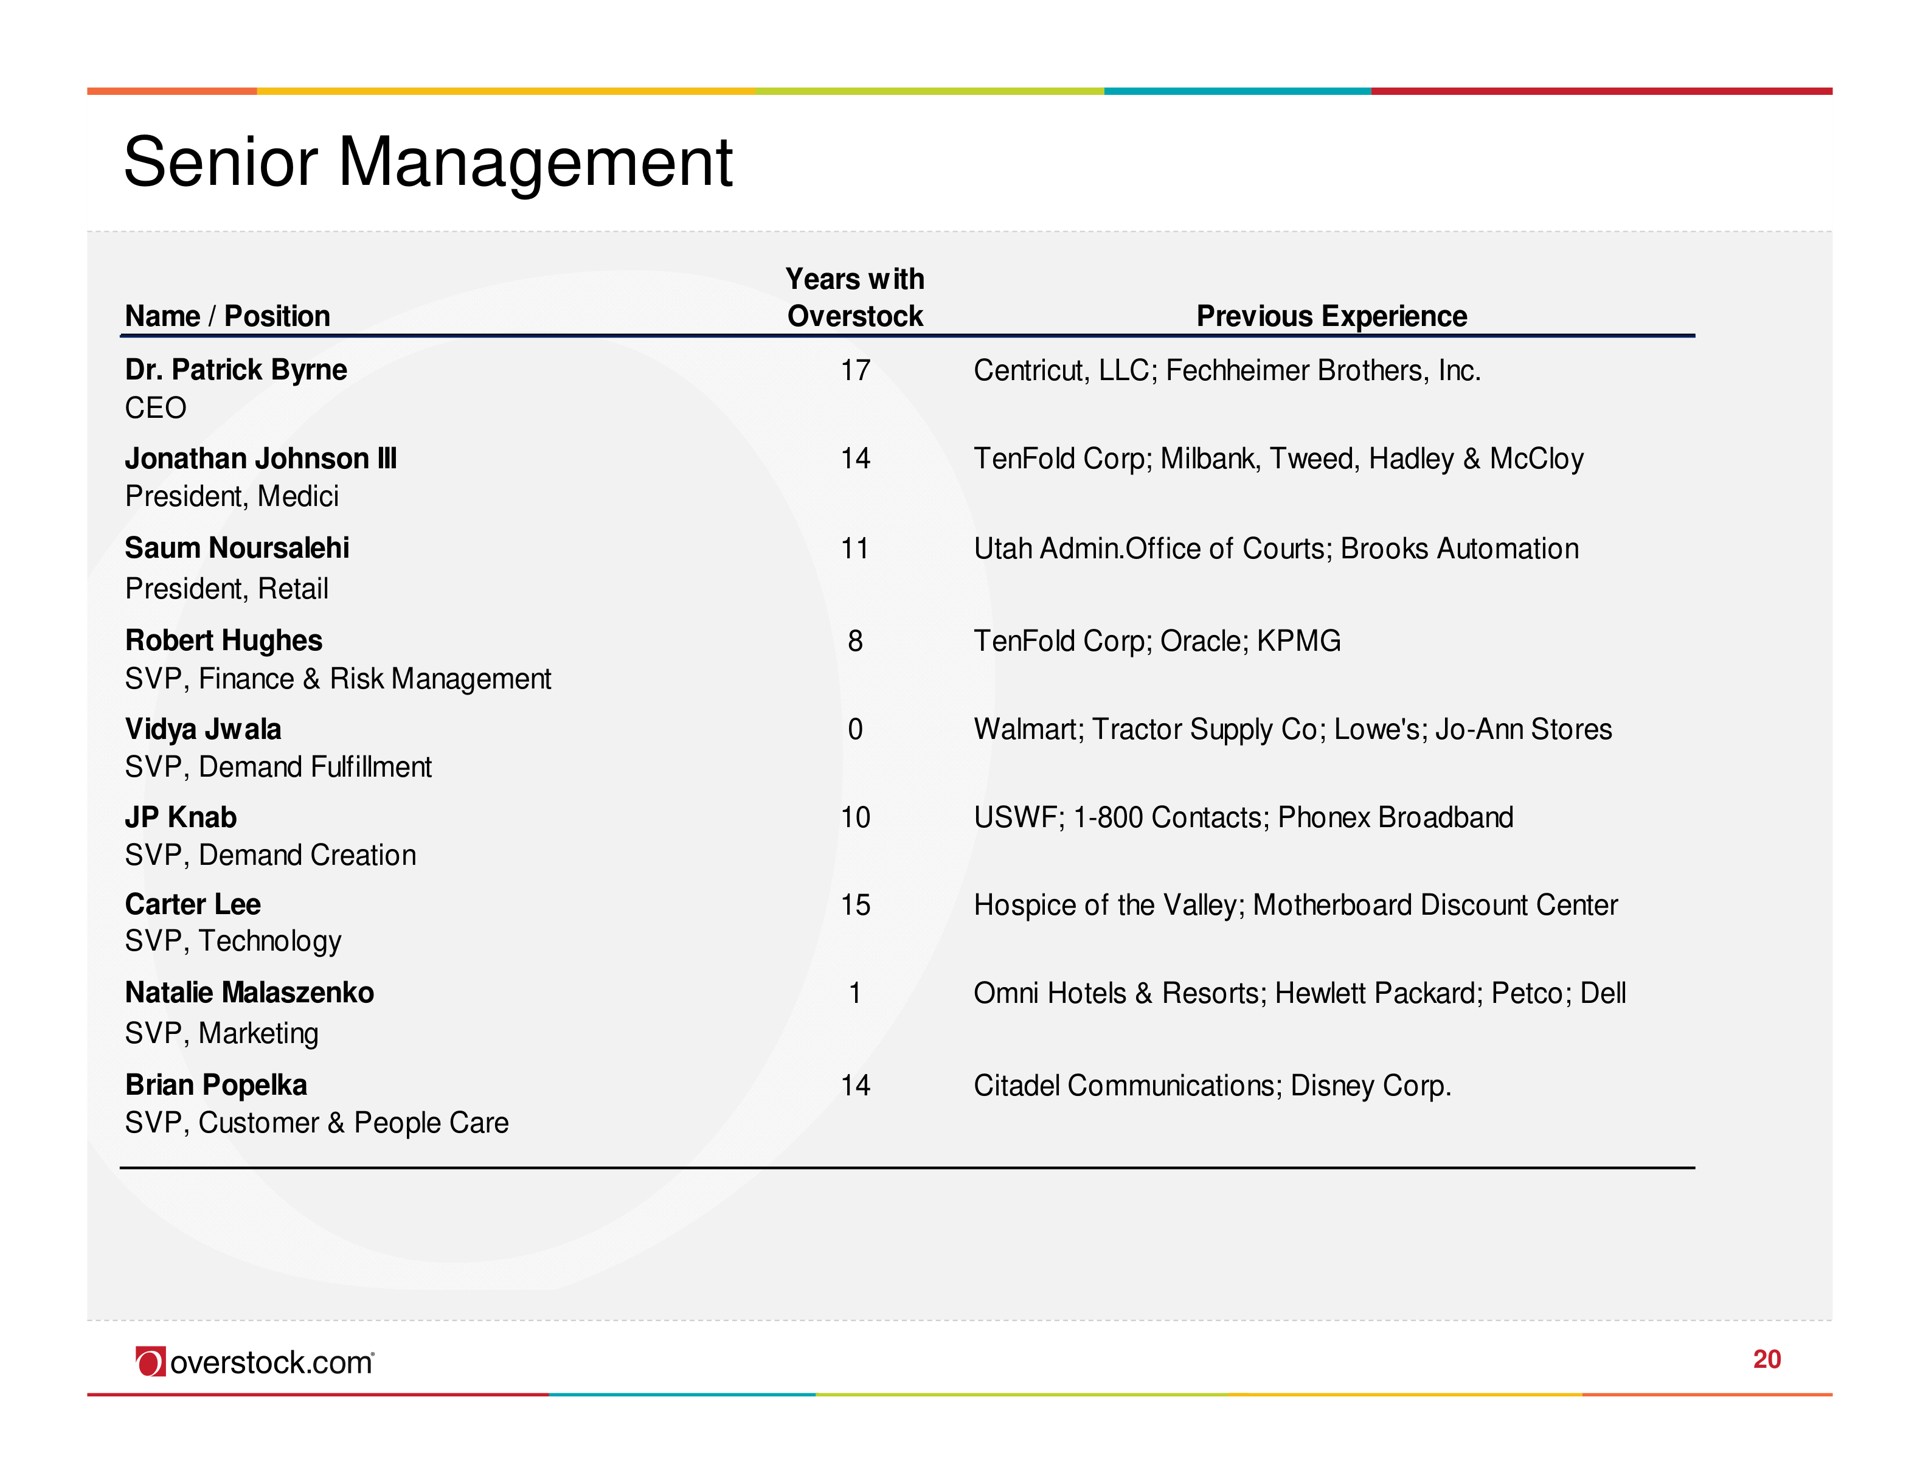 senior management | Overstock